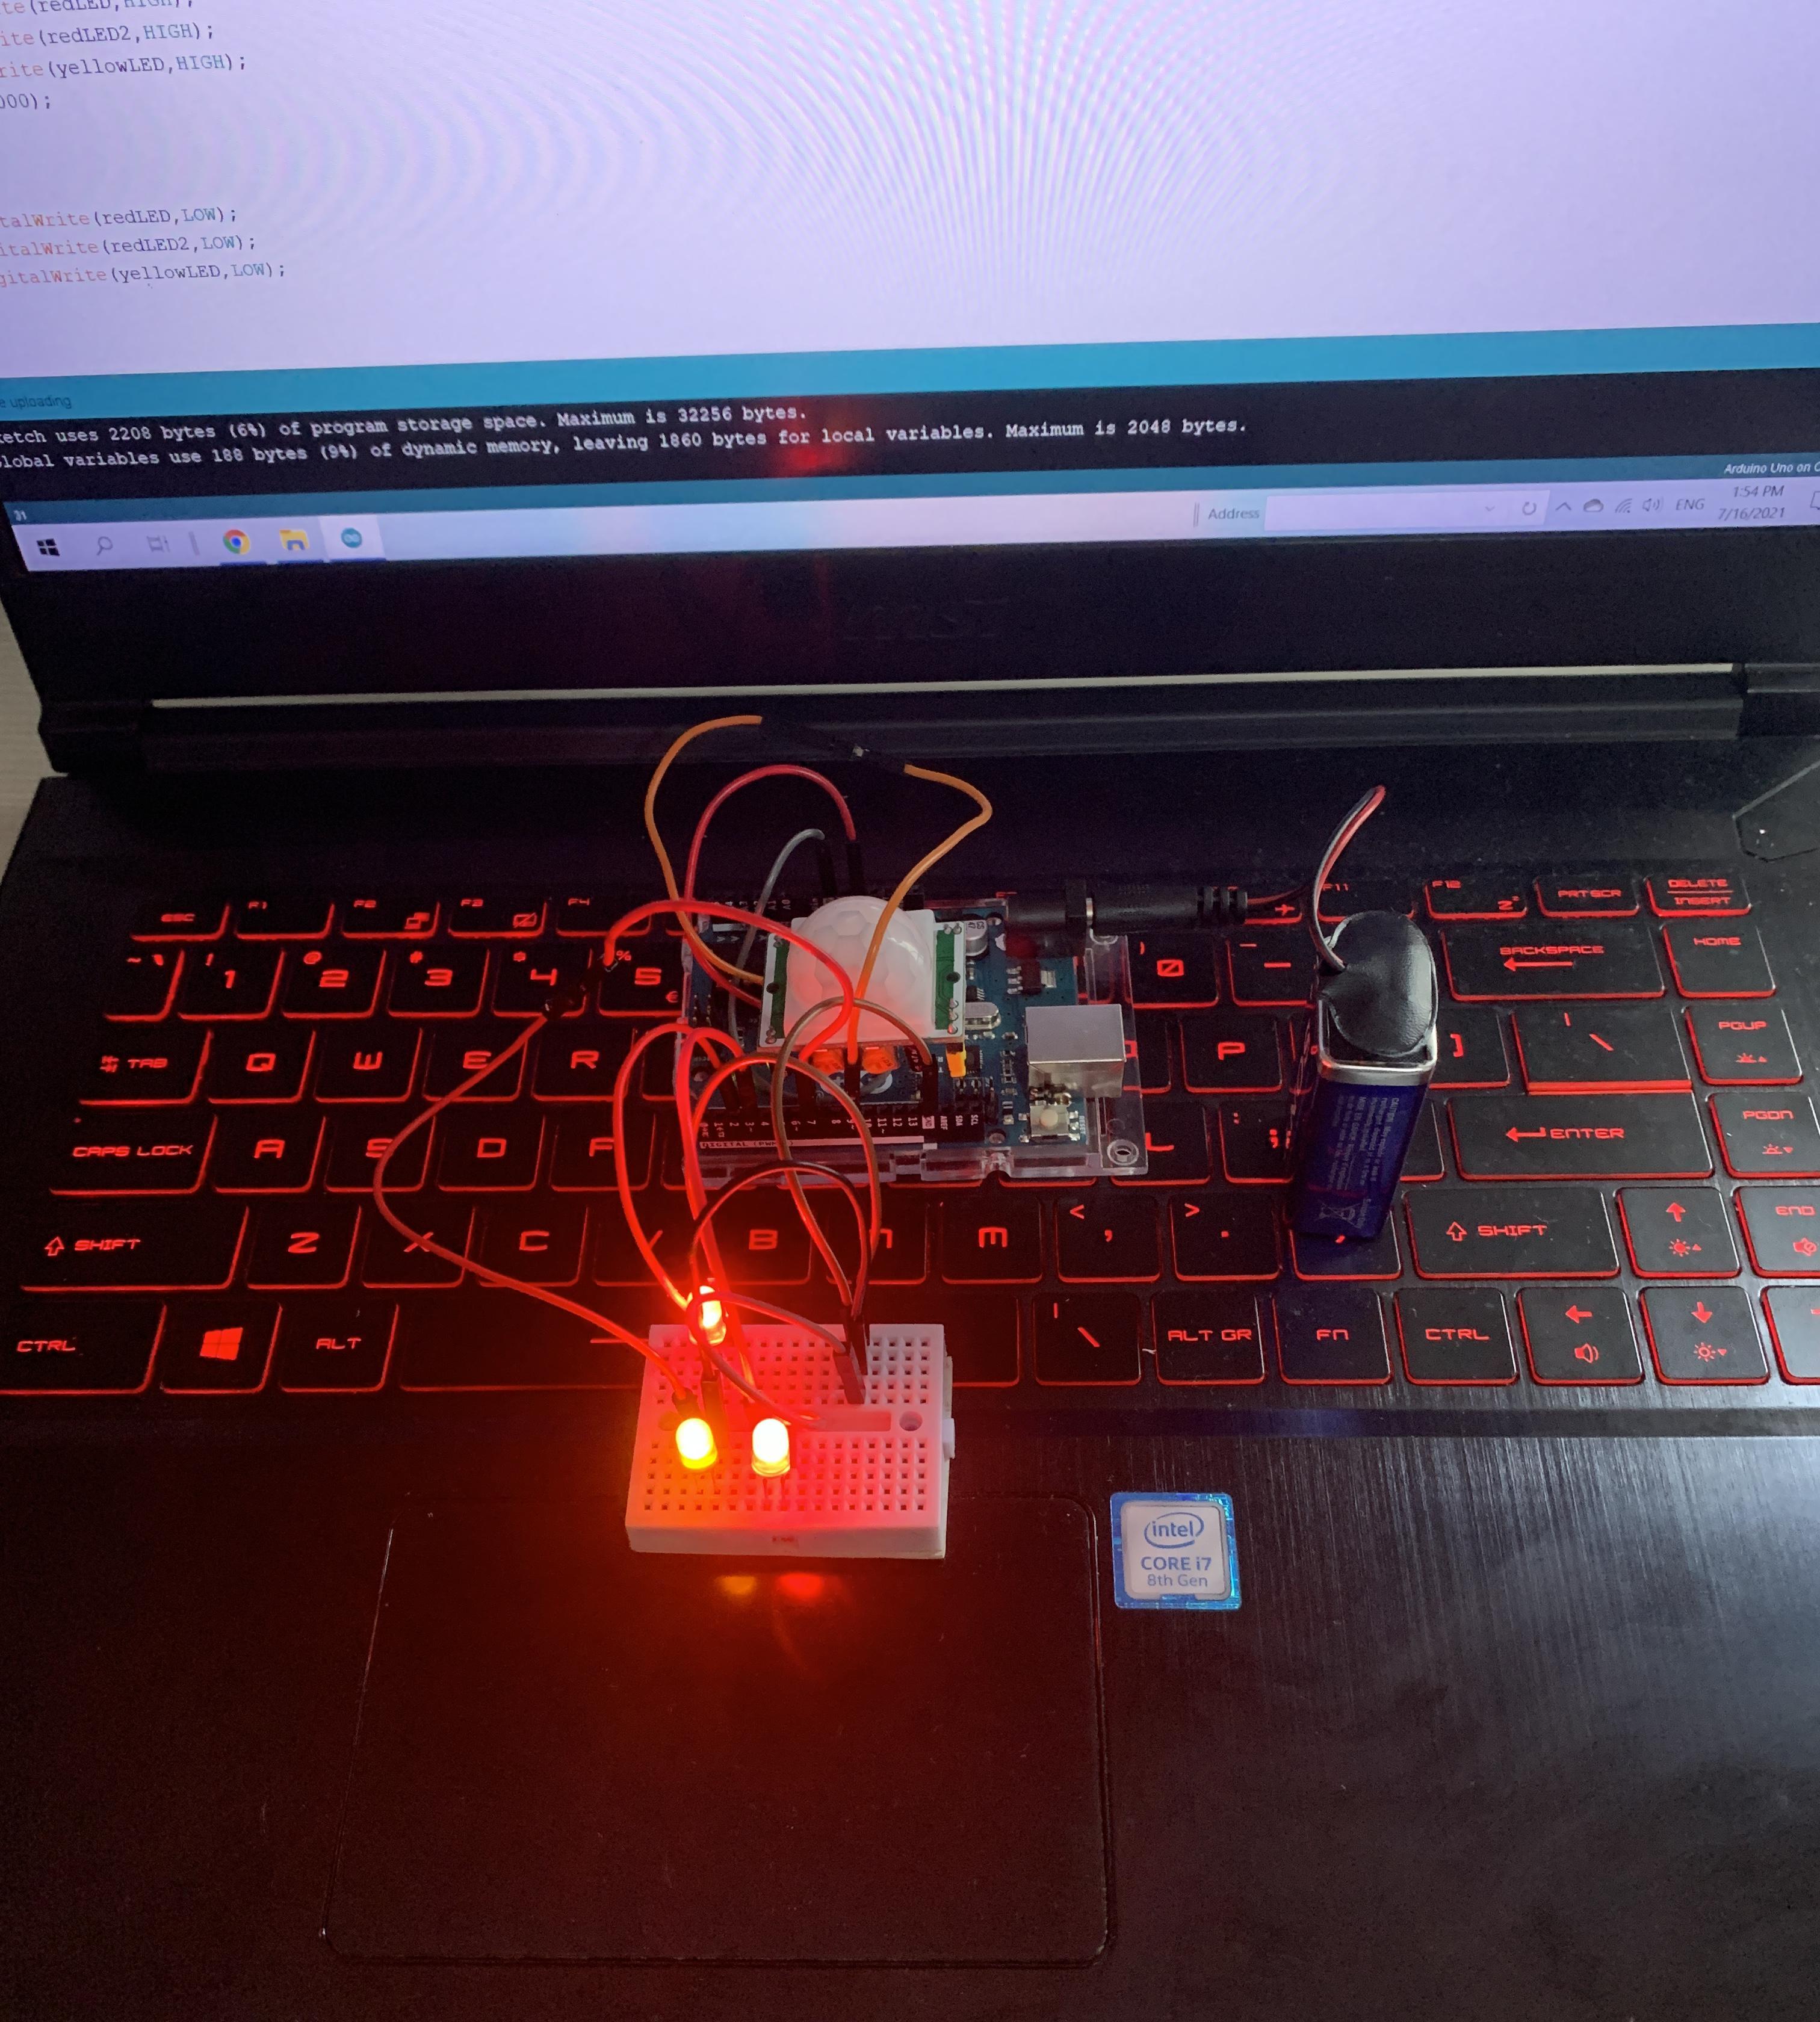 PIR Motion Sensor | HC-SR501 | Arduino